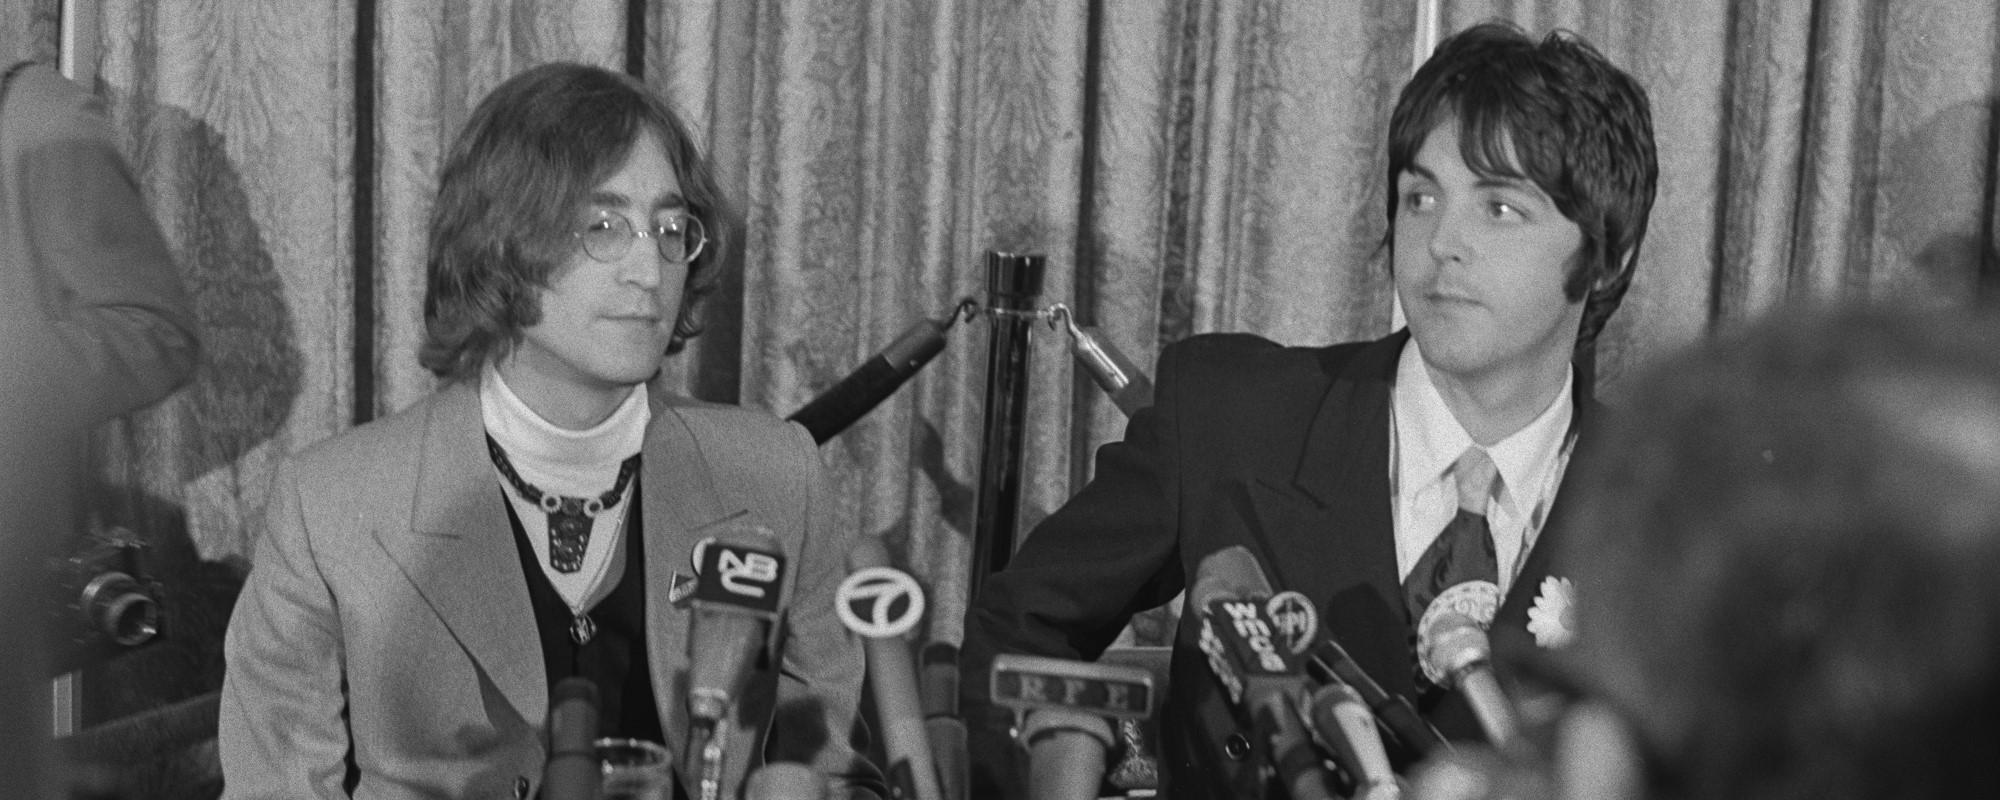 Paul McCartney Recalls Post-Beatles Feud with John Lennon in Latest ‘McCartney: A Life in Lyrics’ Podcast Episode